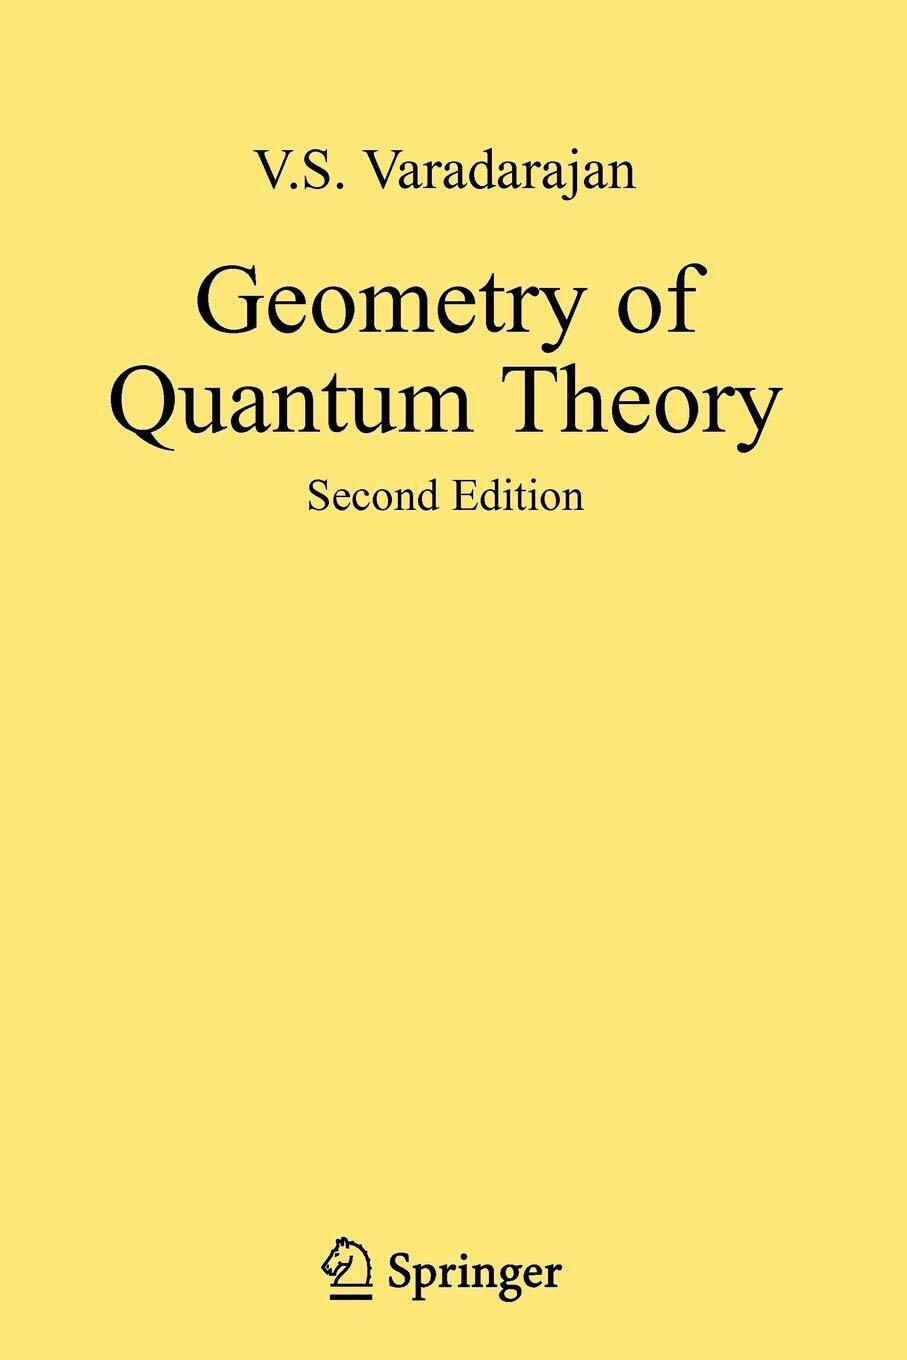 Geometry of Quantum Theory - V. S. Varadarajan - Springer, 2006